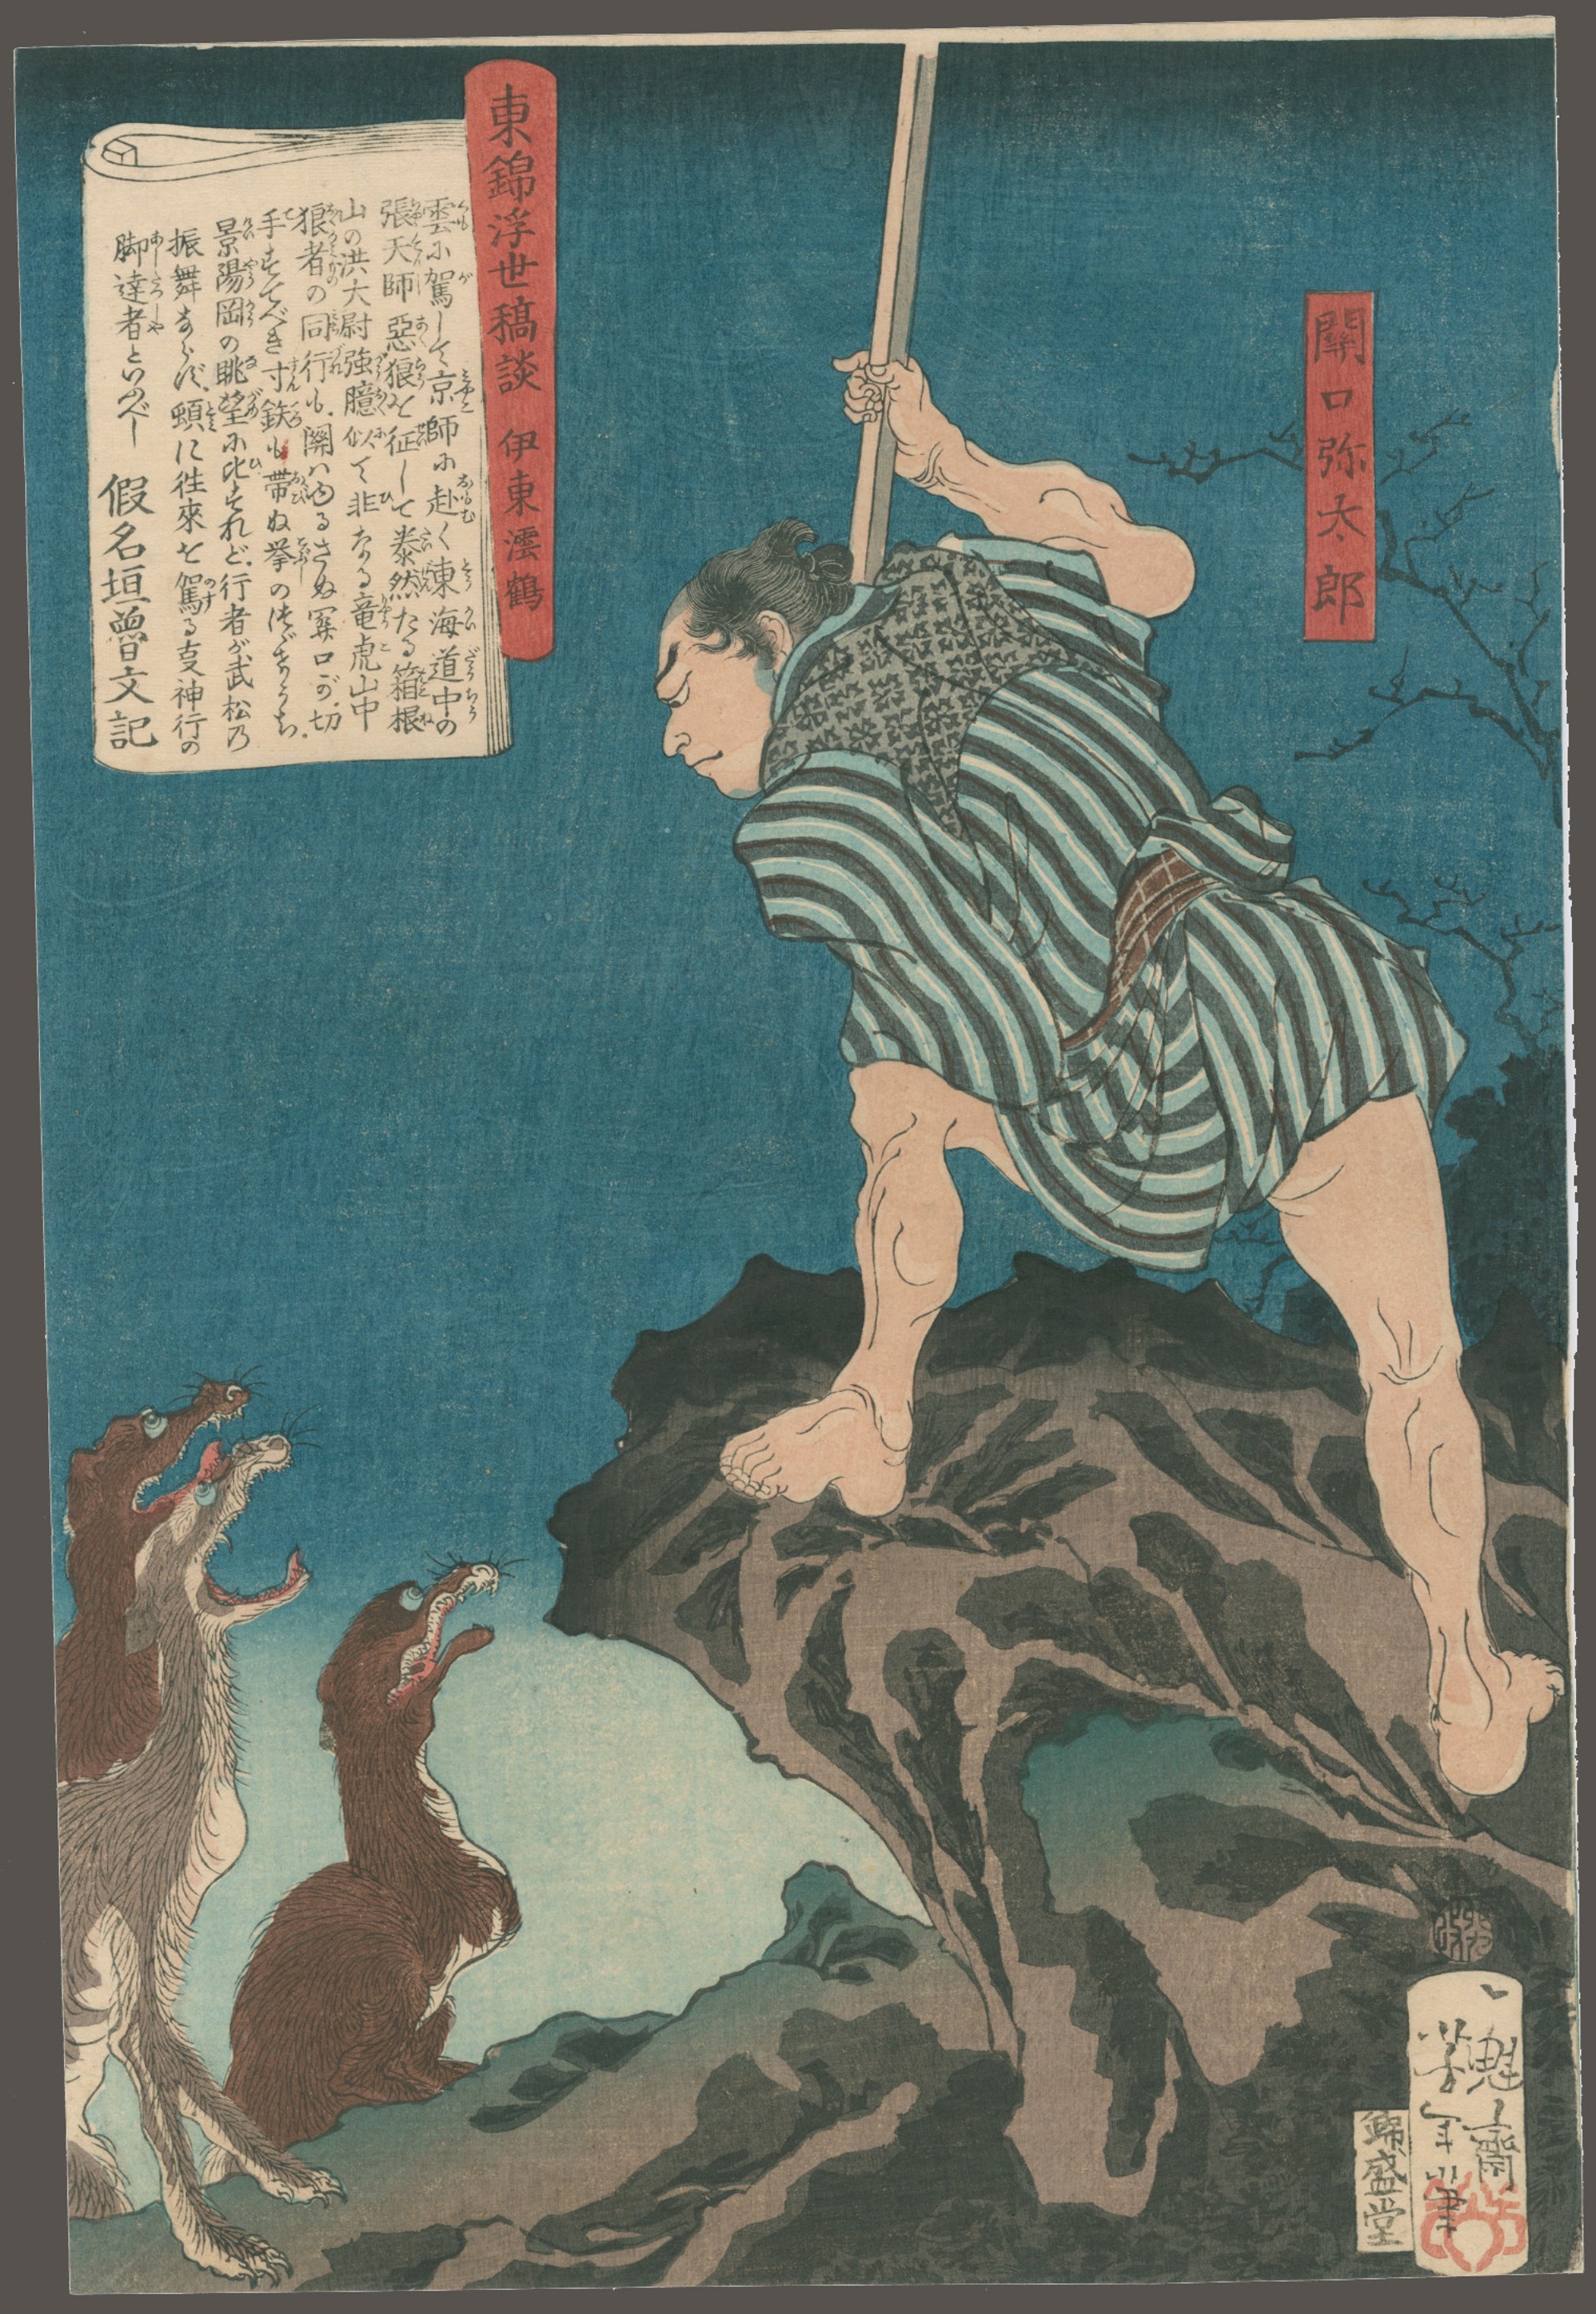 Sekiguchi Yataro, a Companion of Miyamoto Musashi, fighting Wolves in the Hakone Mountains Tales of the Floating World on Eastern Brocade by Yoshitoshi